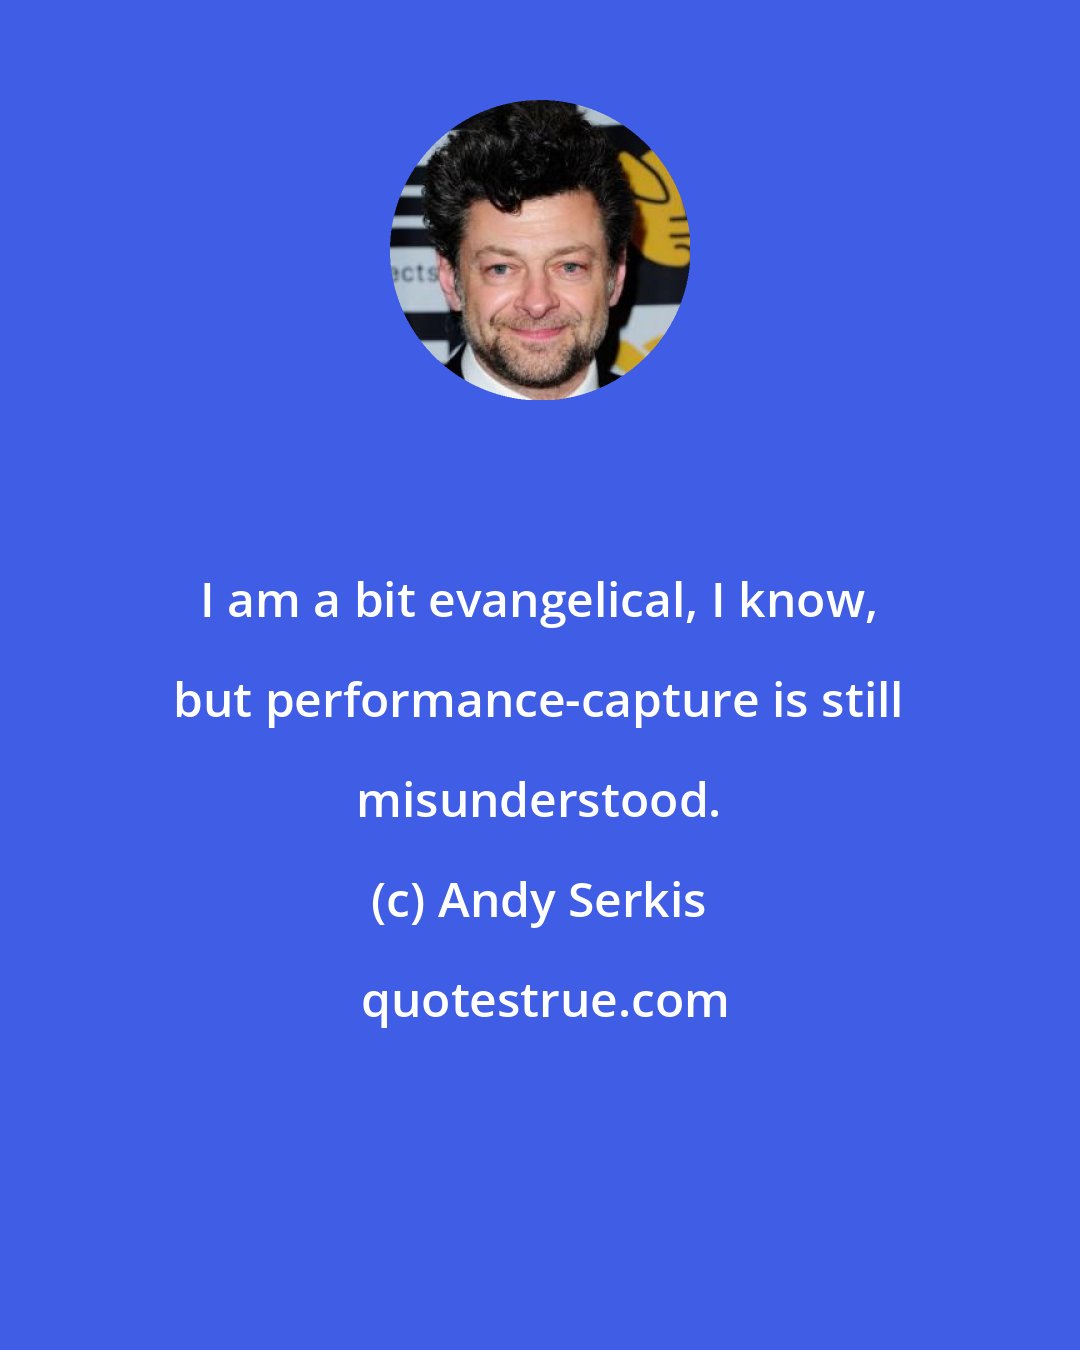 Andy Serkis: I am a bit evangelical, I know, but performance-capture is still misunderstood.